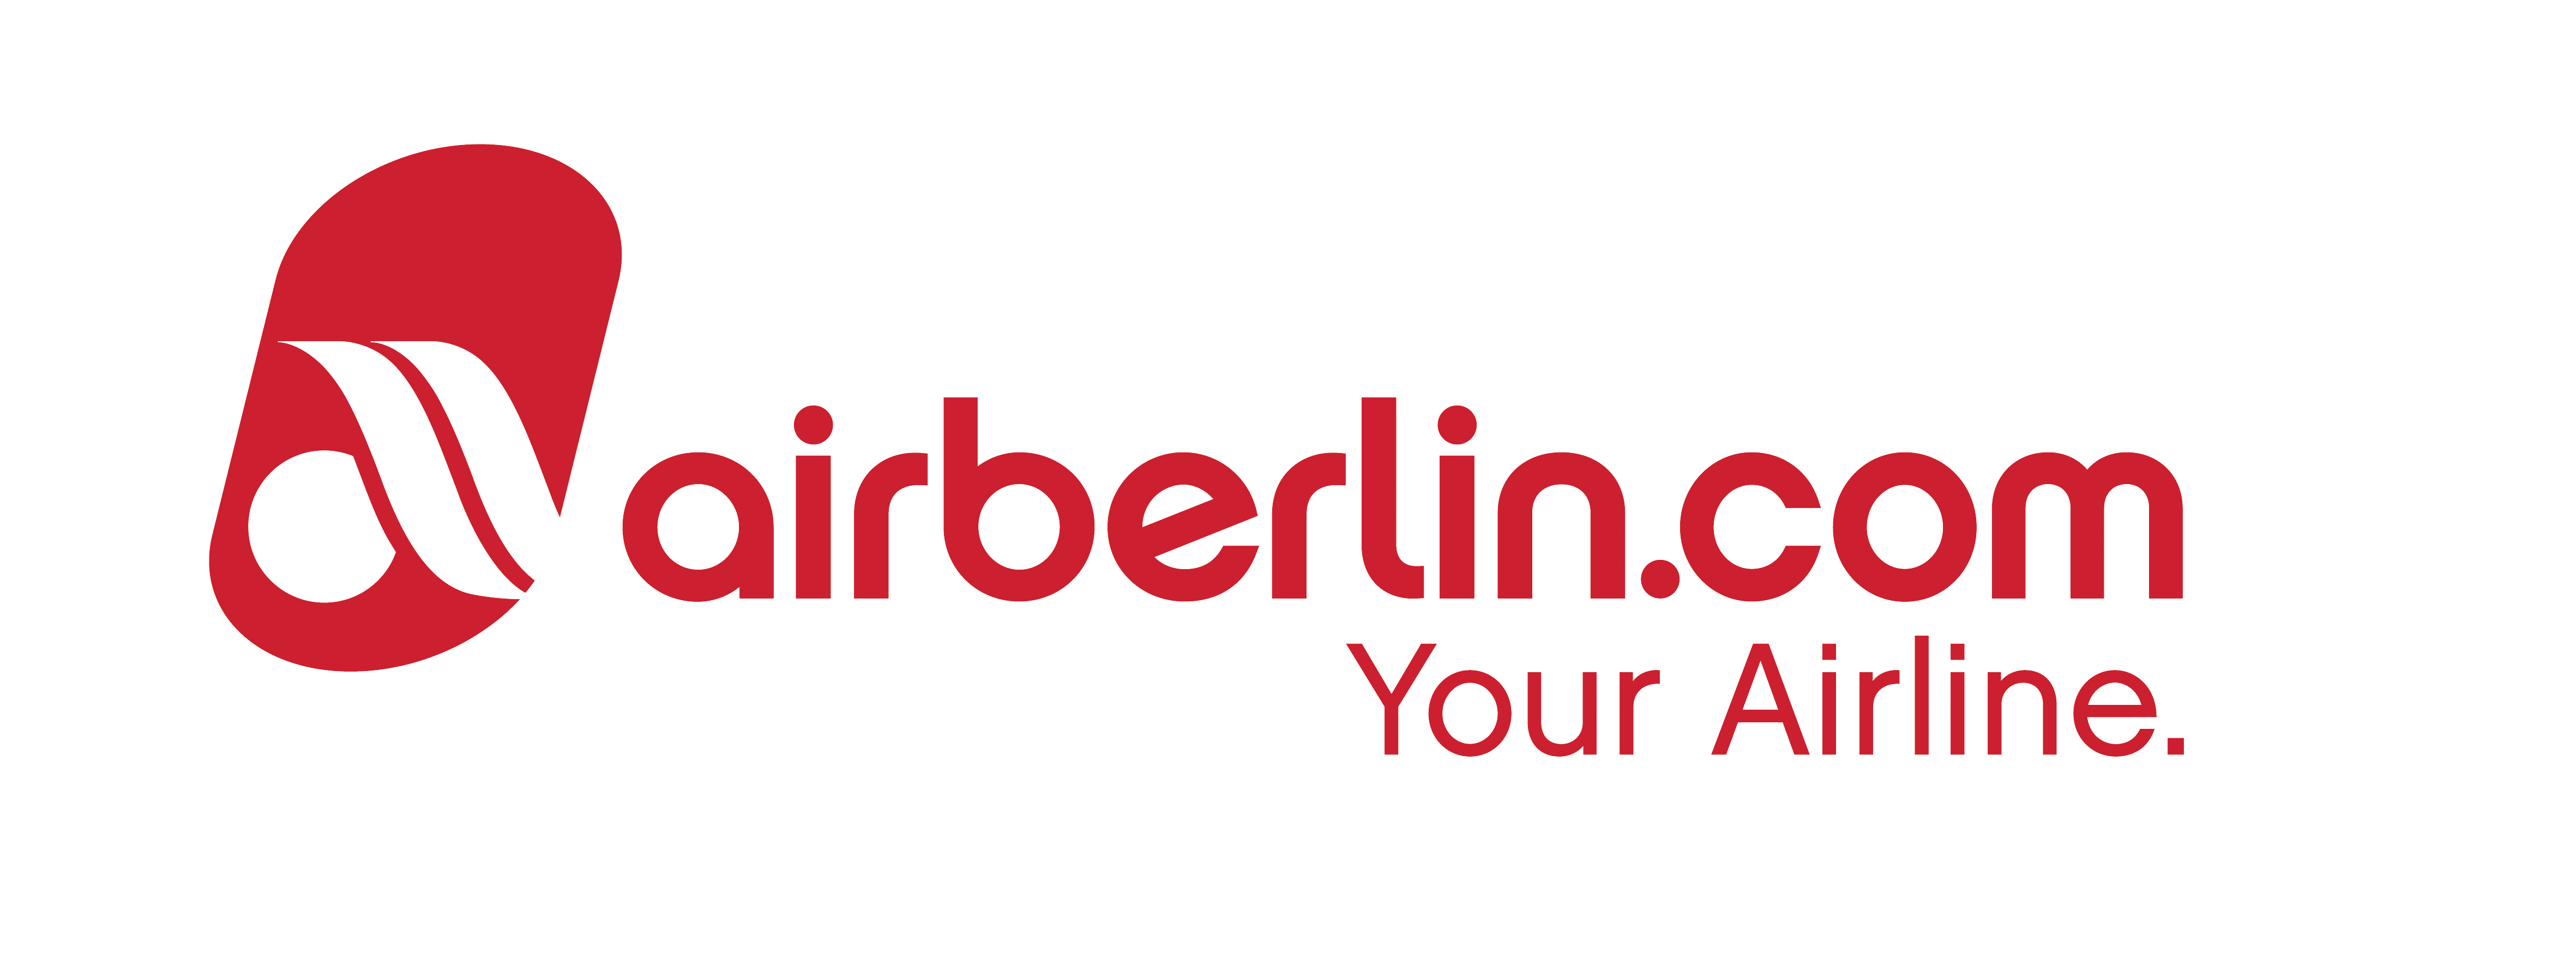 Logo Airberlin Com 2009.jpg   Air Berlin Logo Vector Png - Air Berlin Vector, Transparent background PNG HD thumbnail